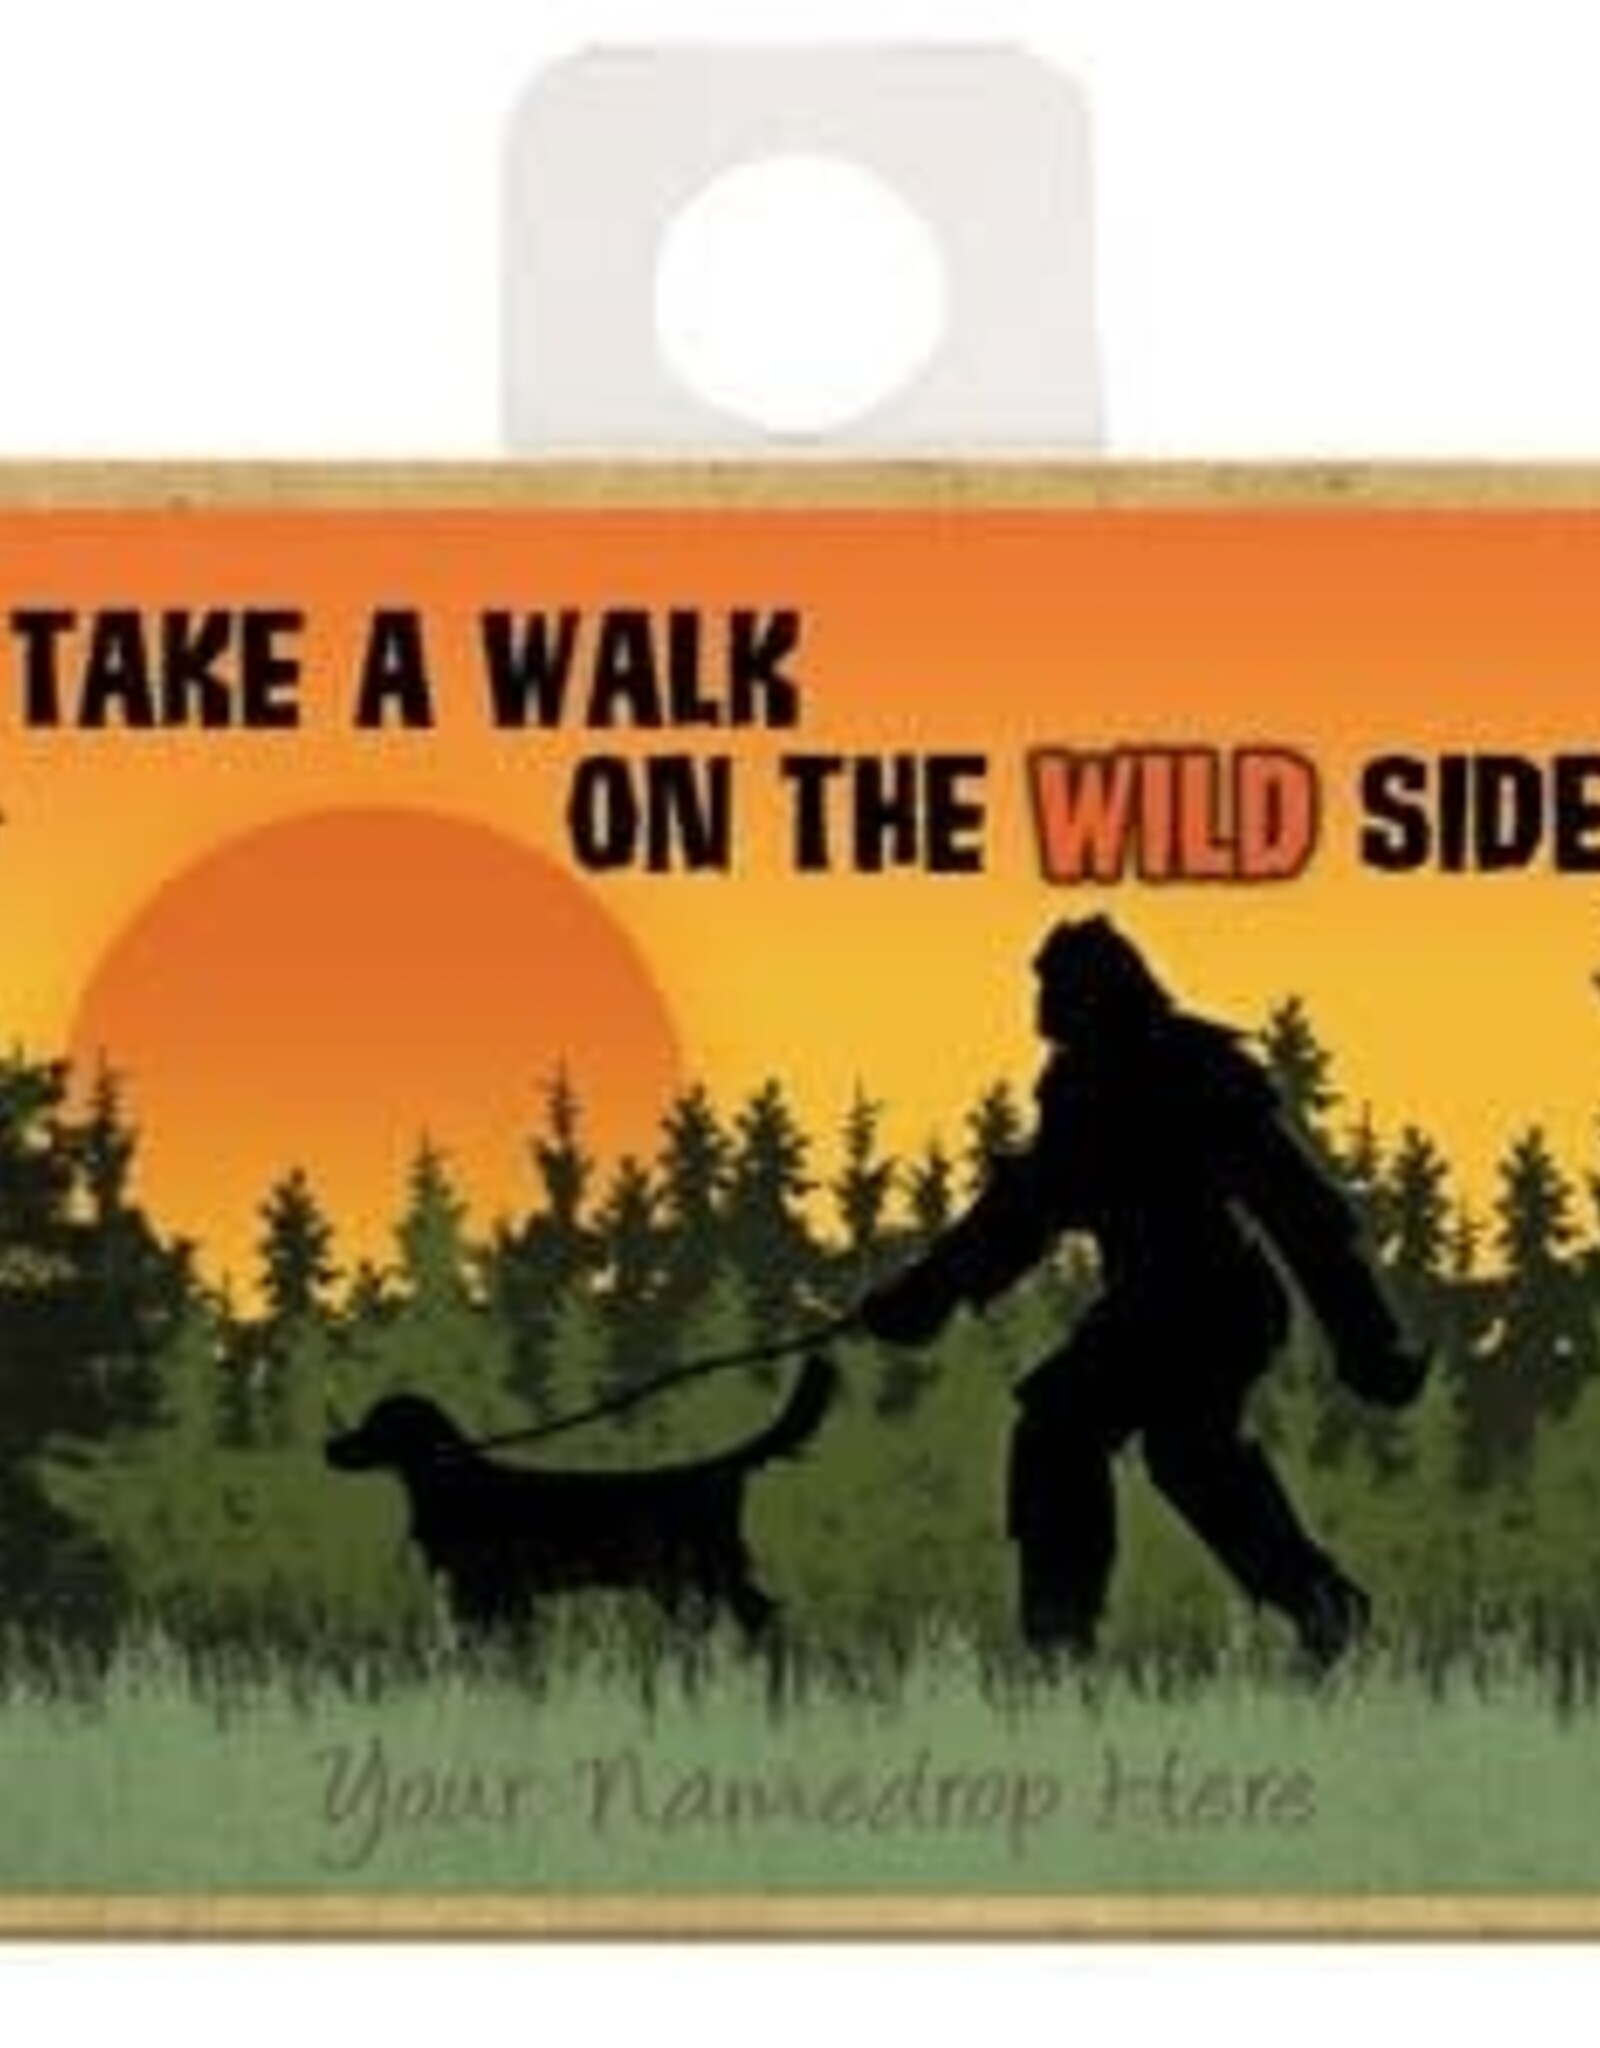 Dog Is Good Refrigerator Magnet - Take a walk on the wild side (Boise, ID)  - Bigfoot Walking A Dog